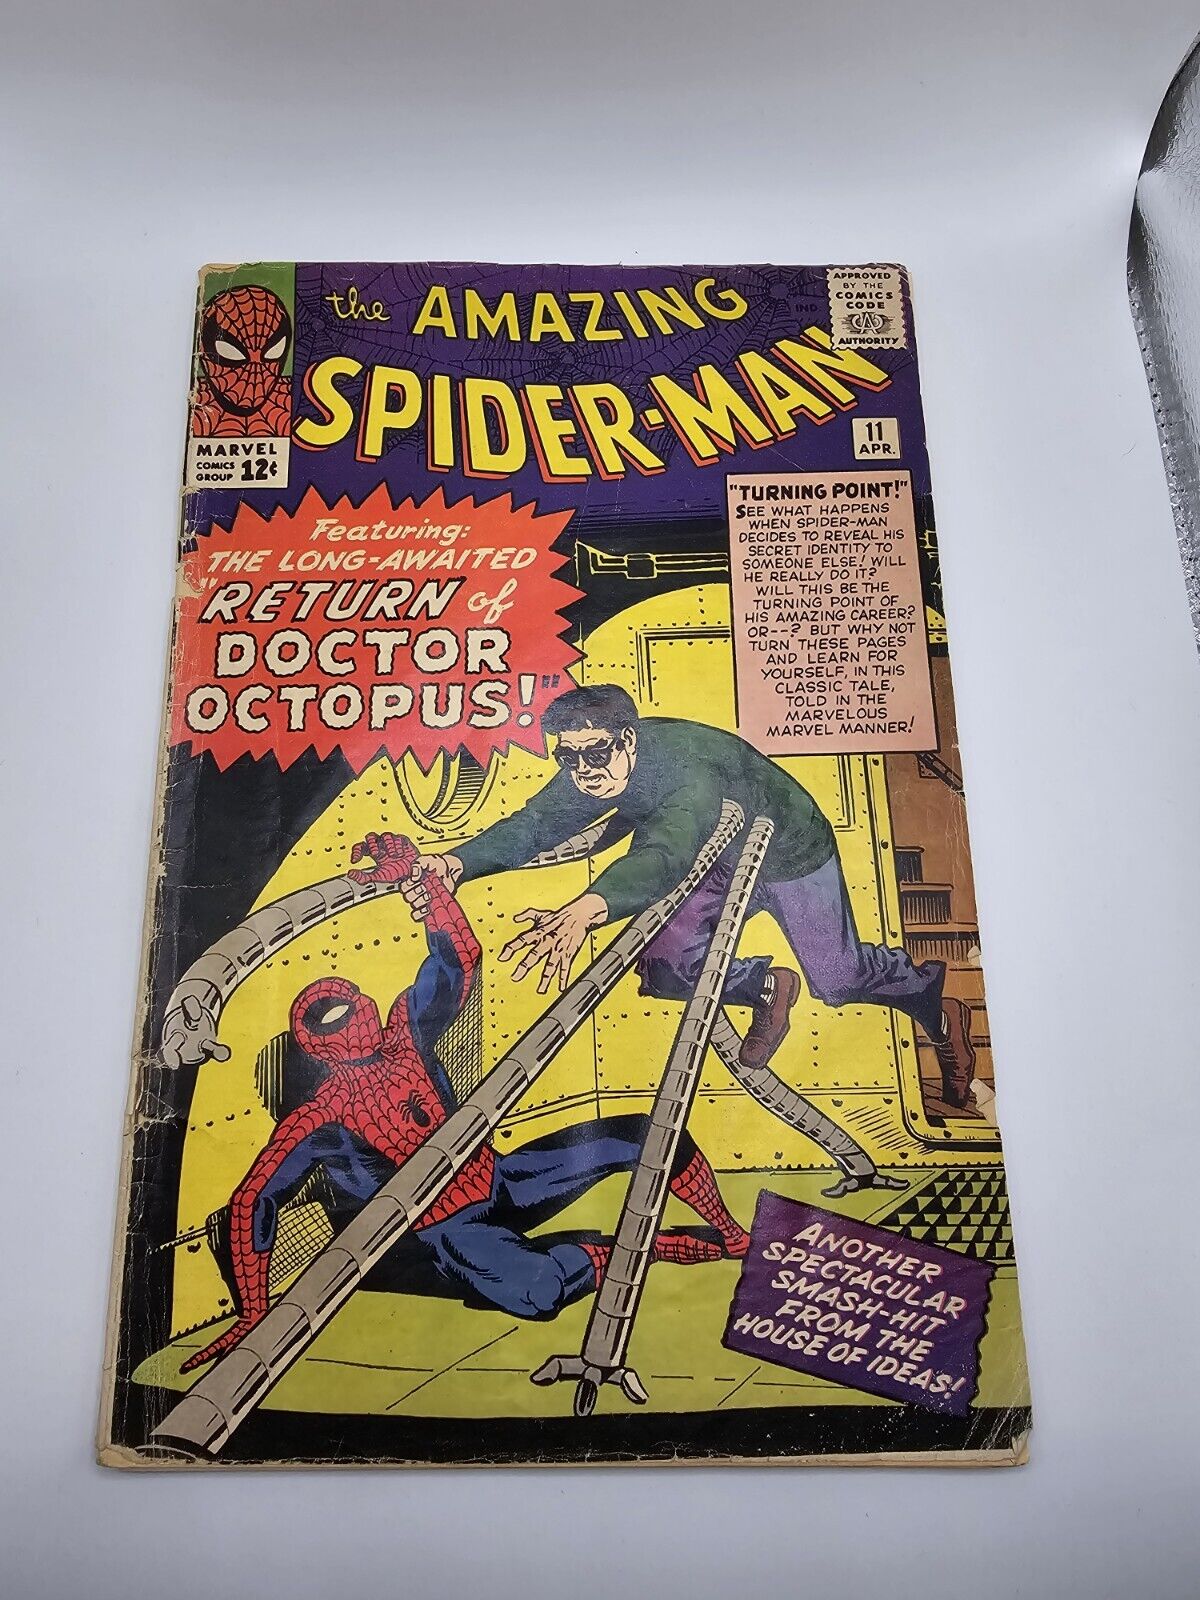 Amazing Spider-Man #11 Comic Book - Steve Ditko Art - Silver Age Marvel - G/VG